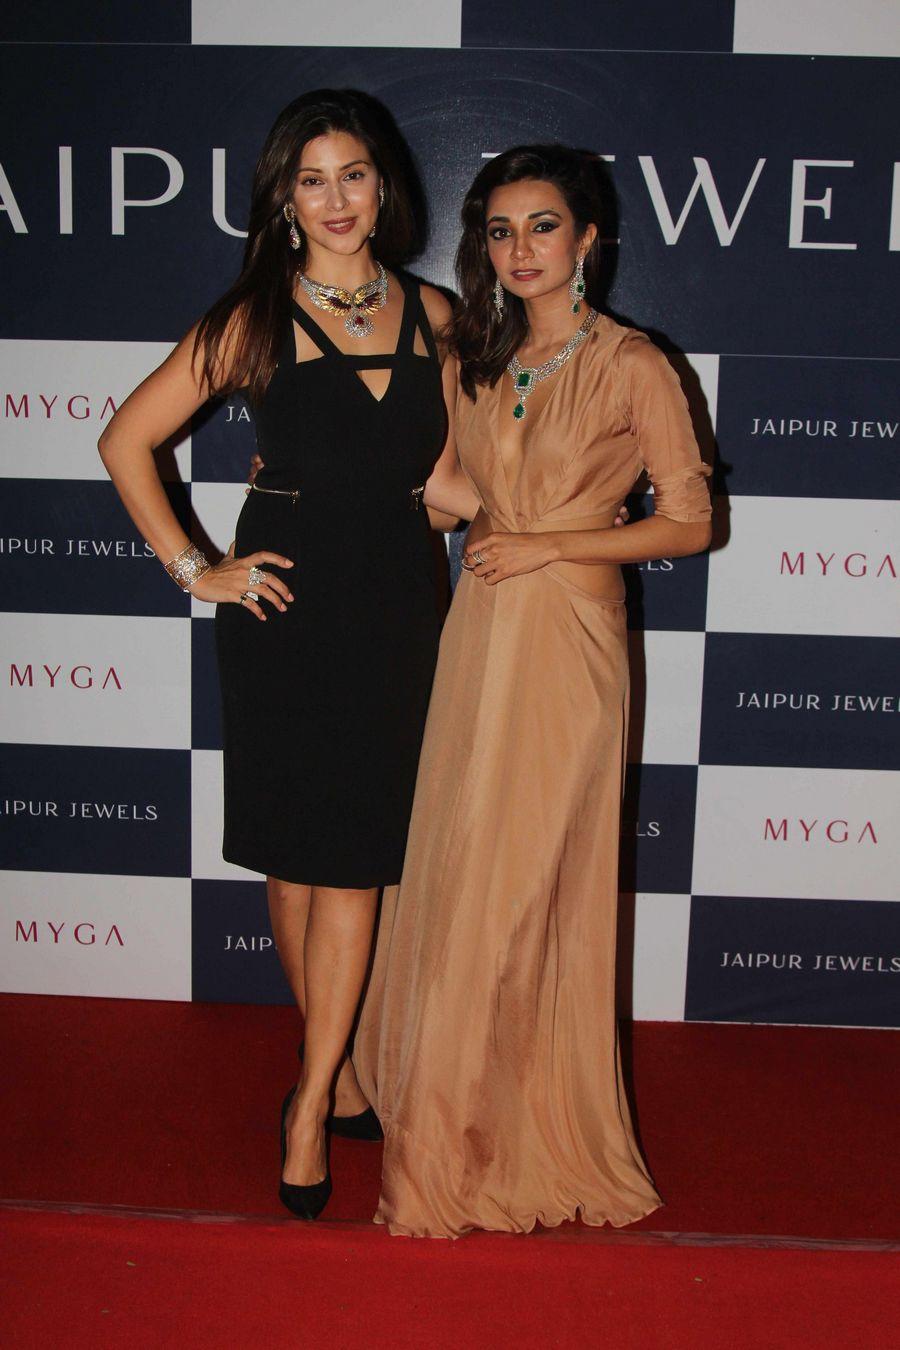 Jaipur Jewels Unveils myga Campaign Photos